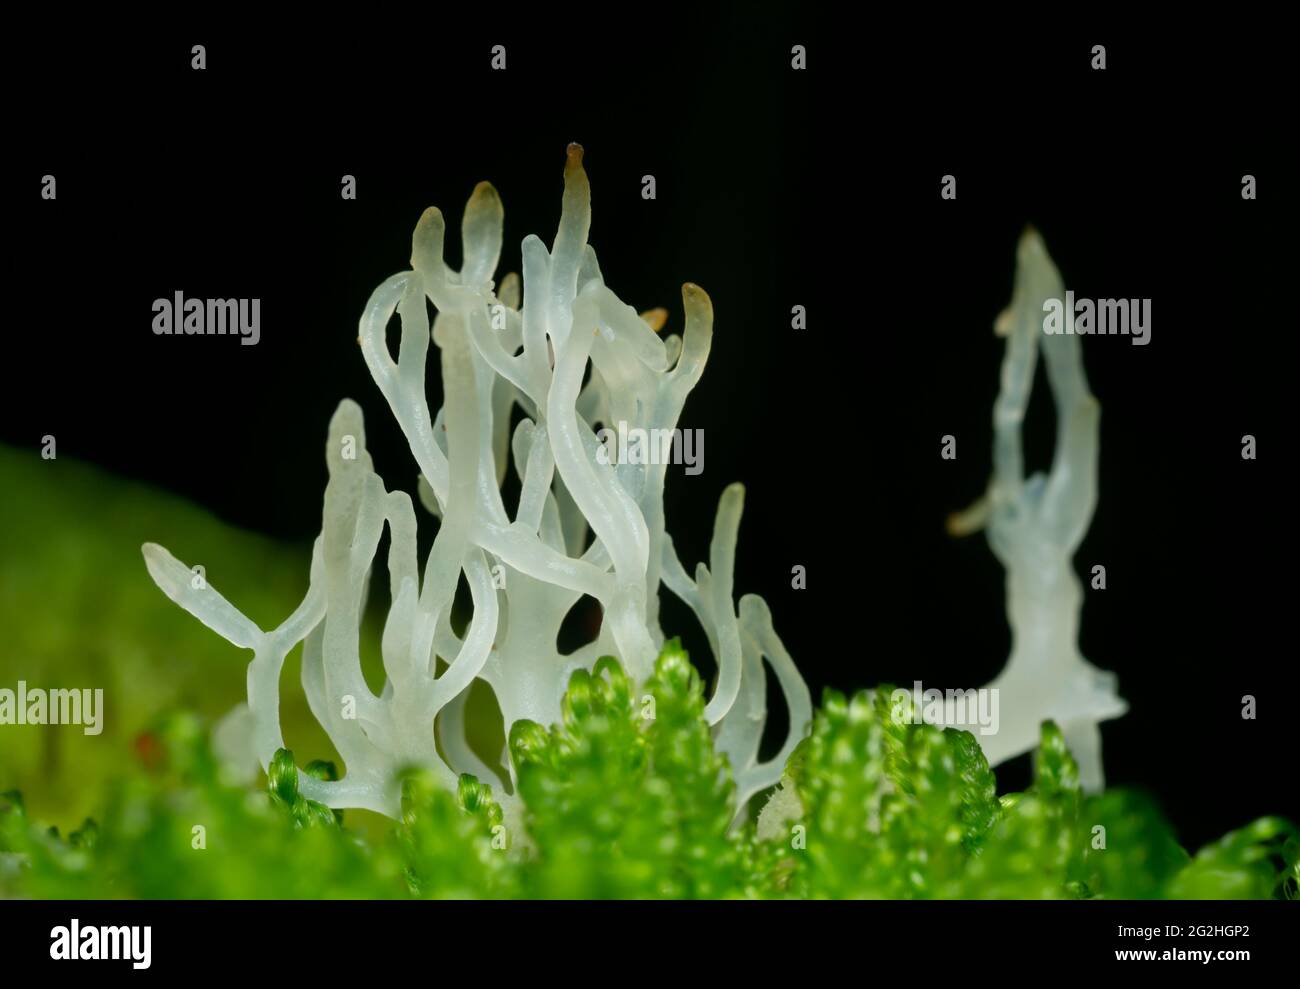 Lentaria epichnoa growing in natural environment Stock Photo